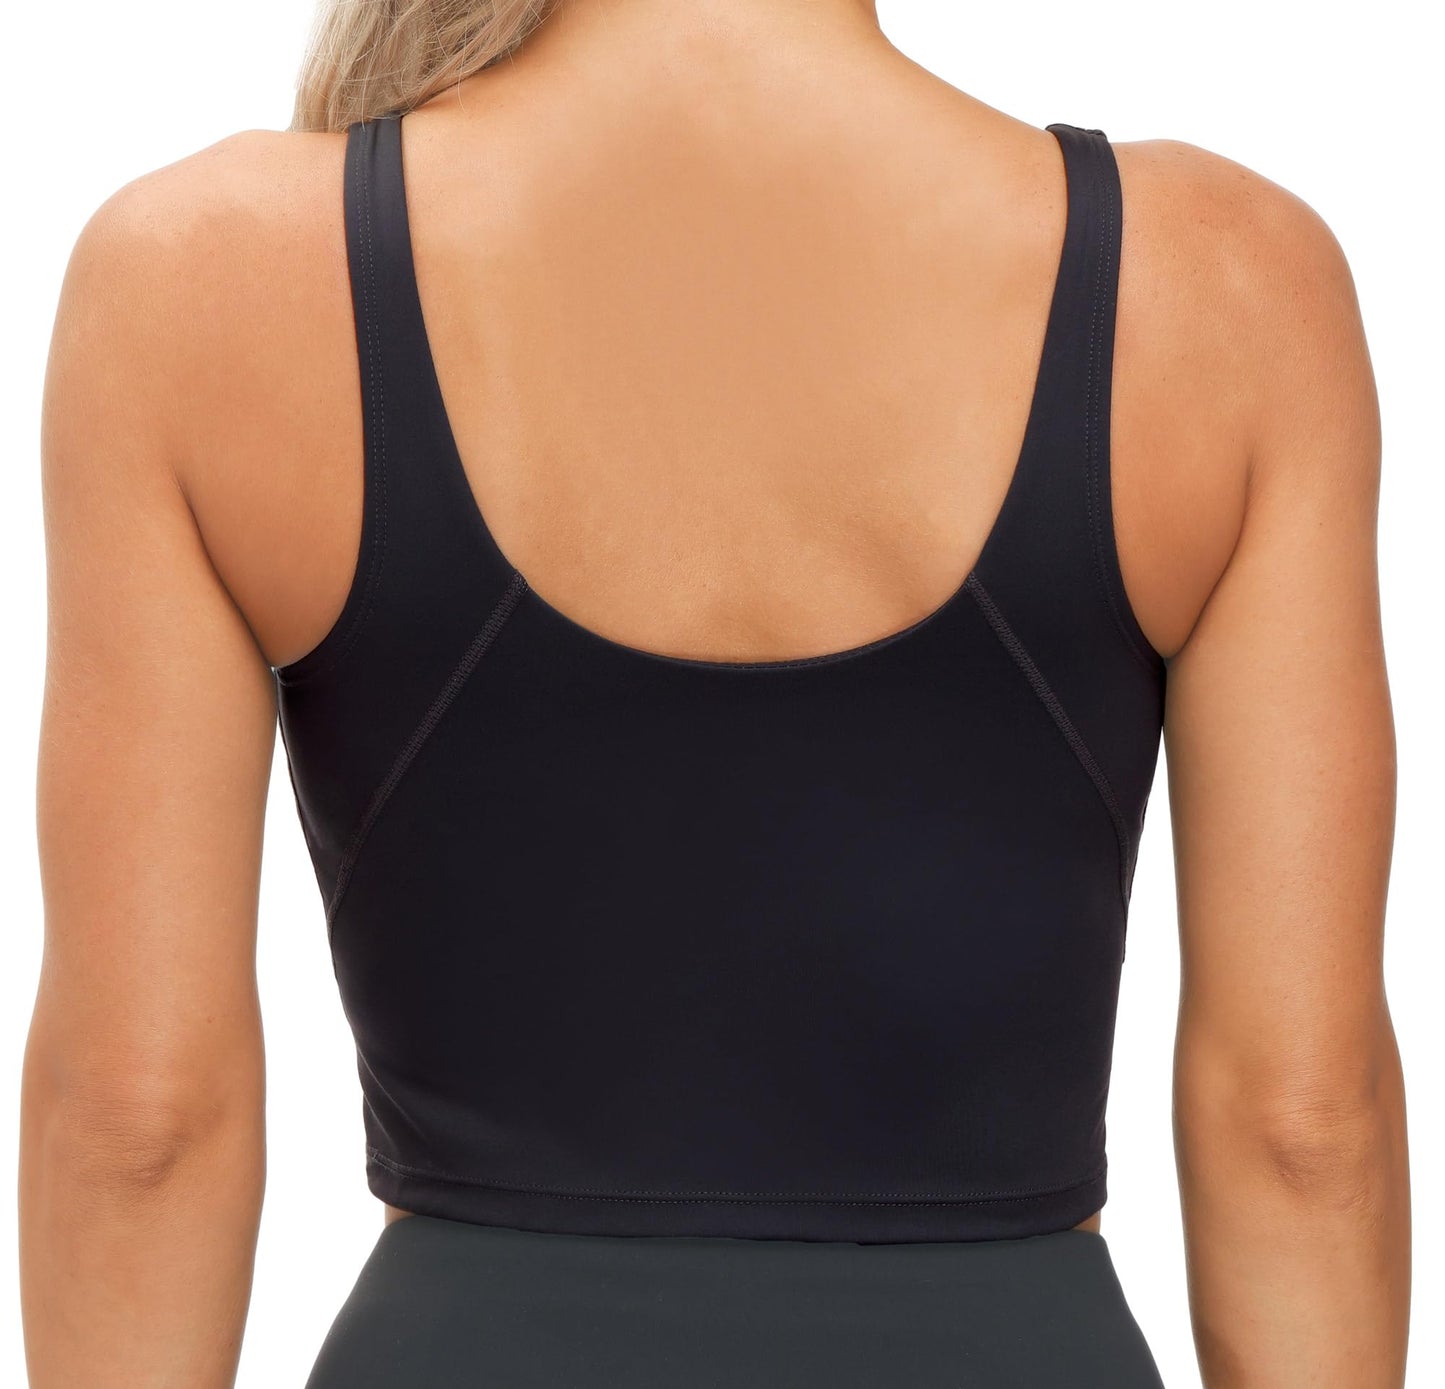 Women’s Longline Sports Bra Wirefree Padded Medium Support Yoga Bras Gym Running Workout Tank Tops (Black, Medium)